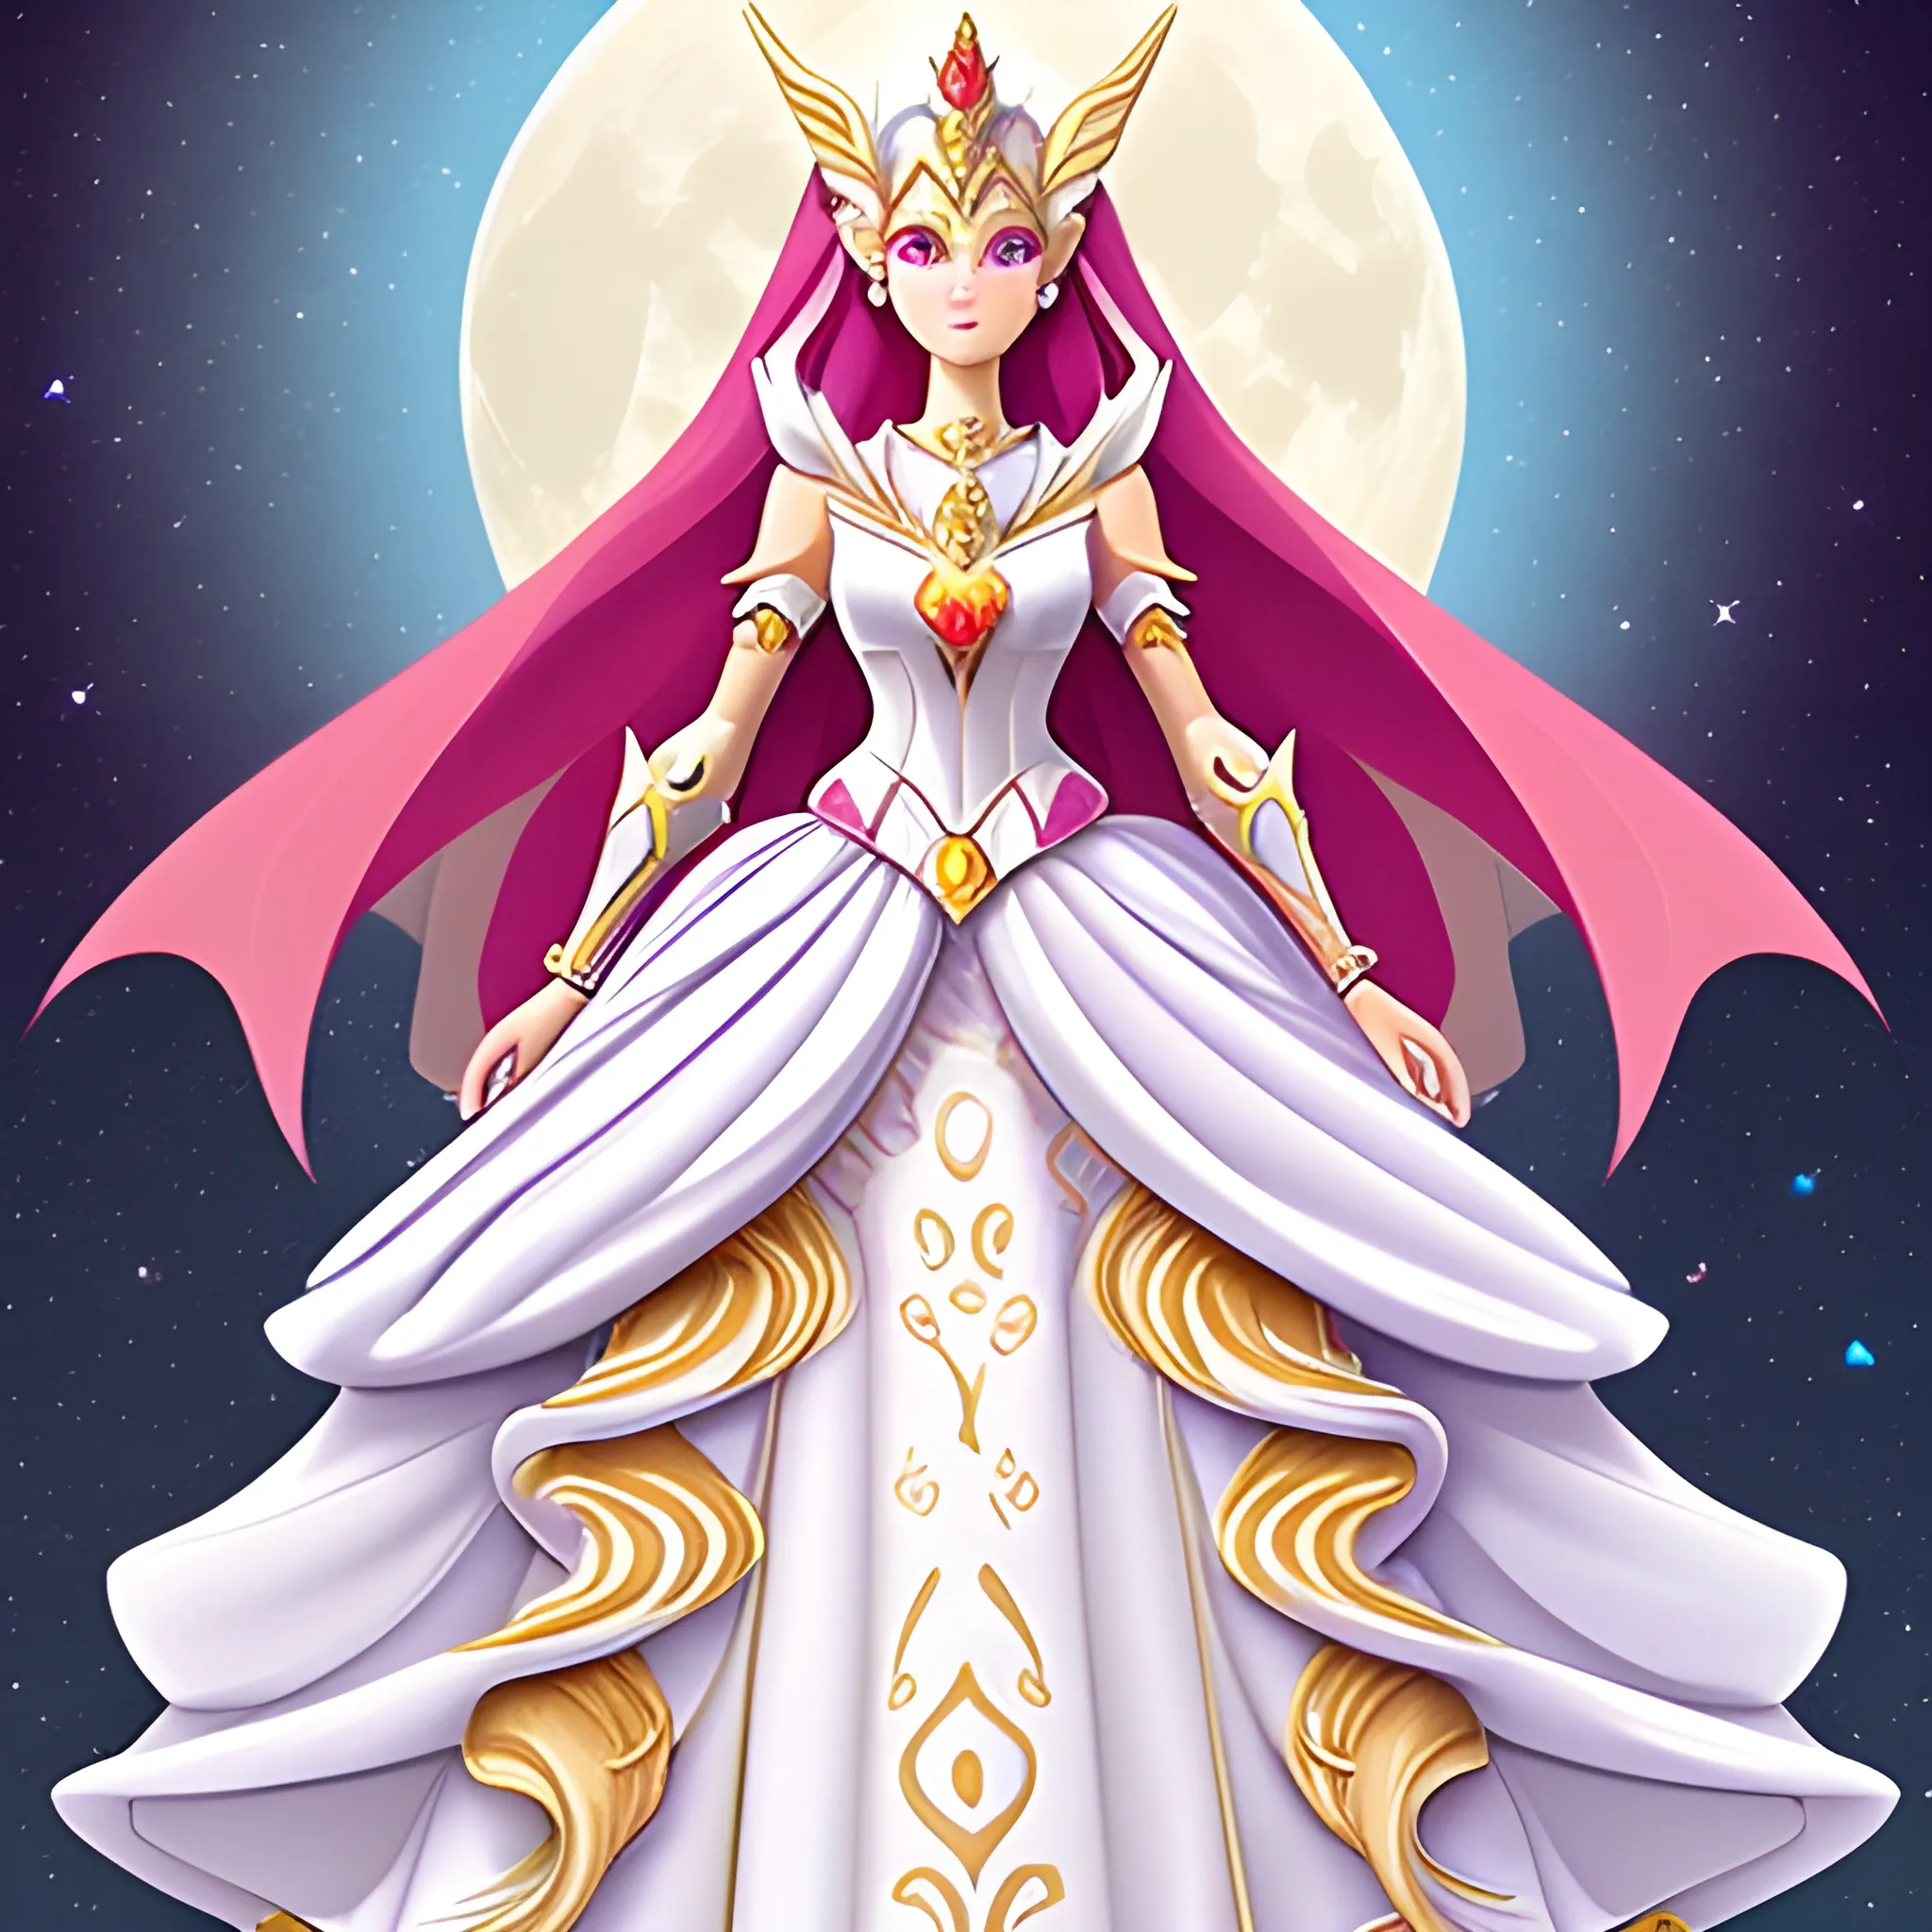 princess wedding dress warrior moon goddess armor majestic she-ra extravagant fantasy gown